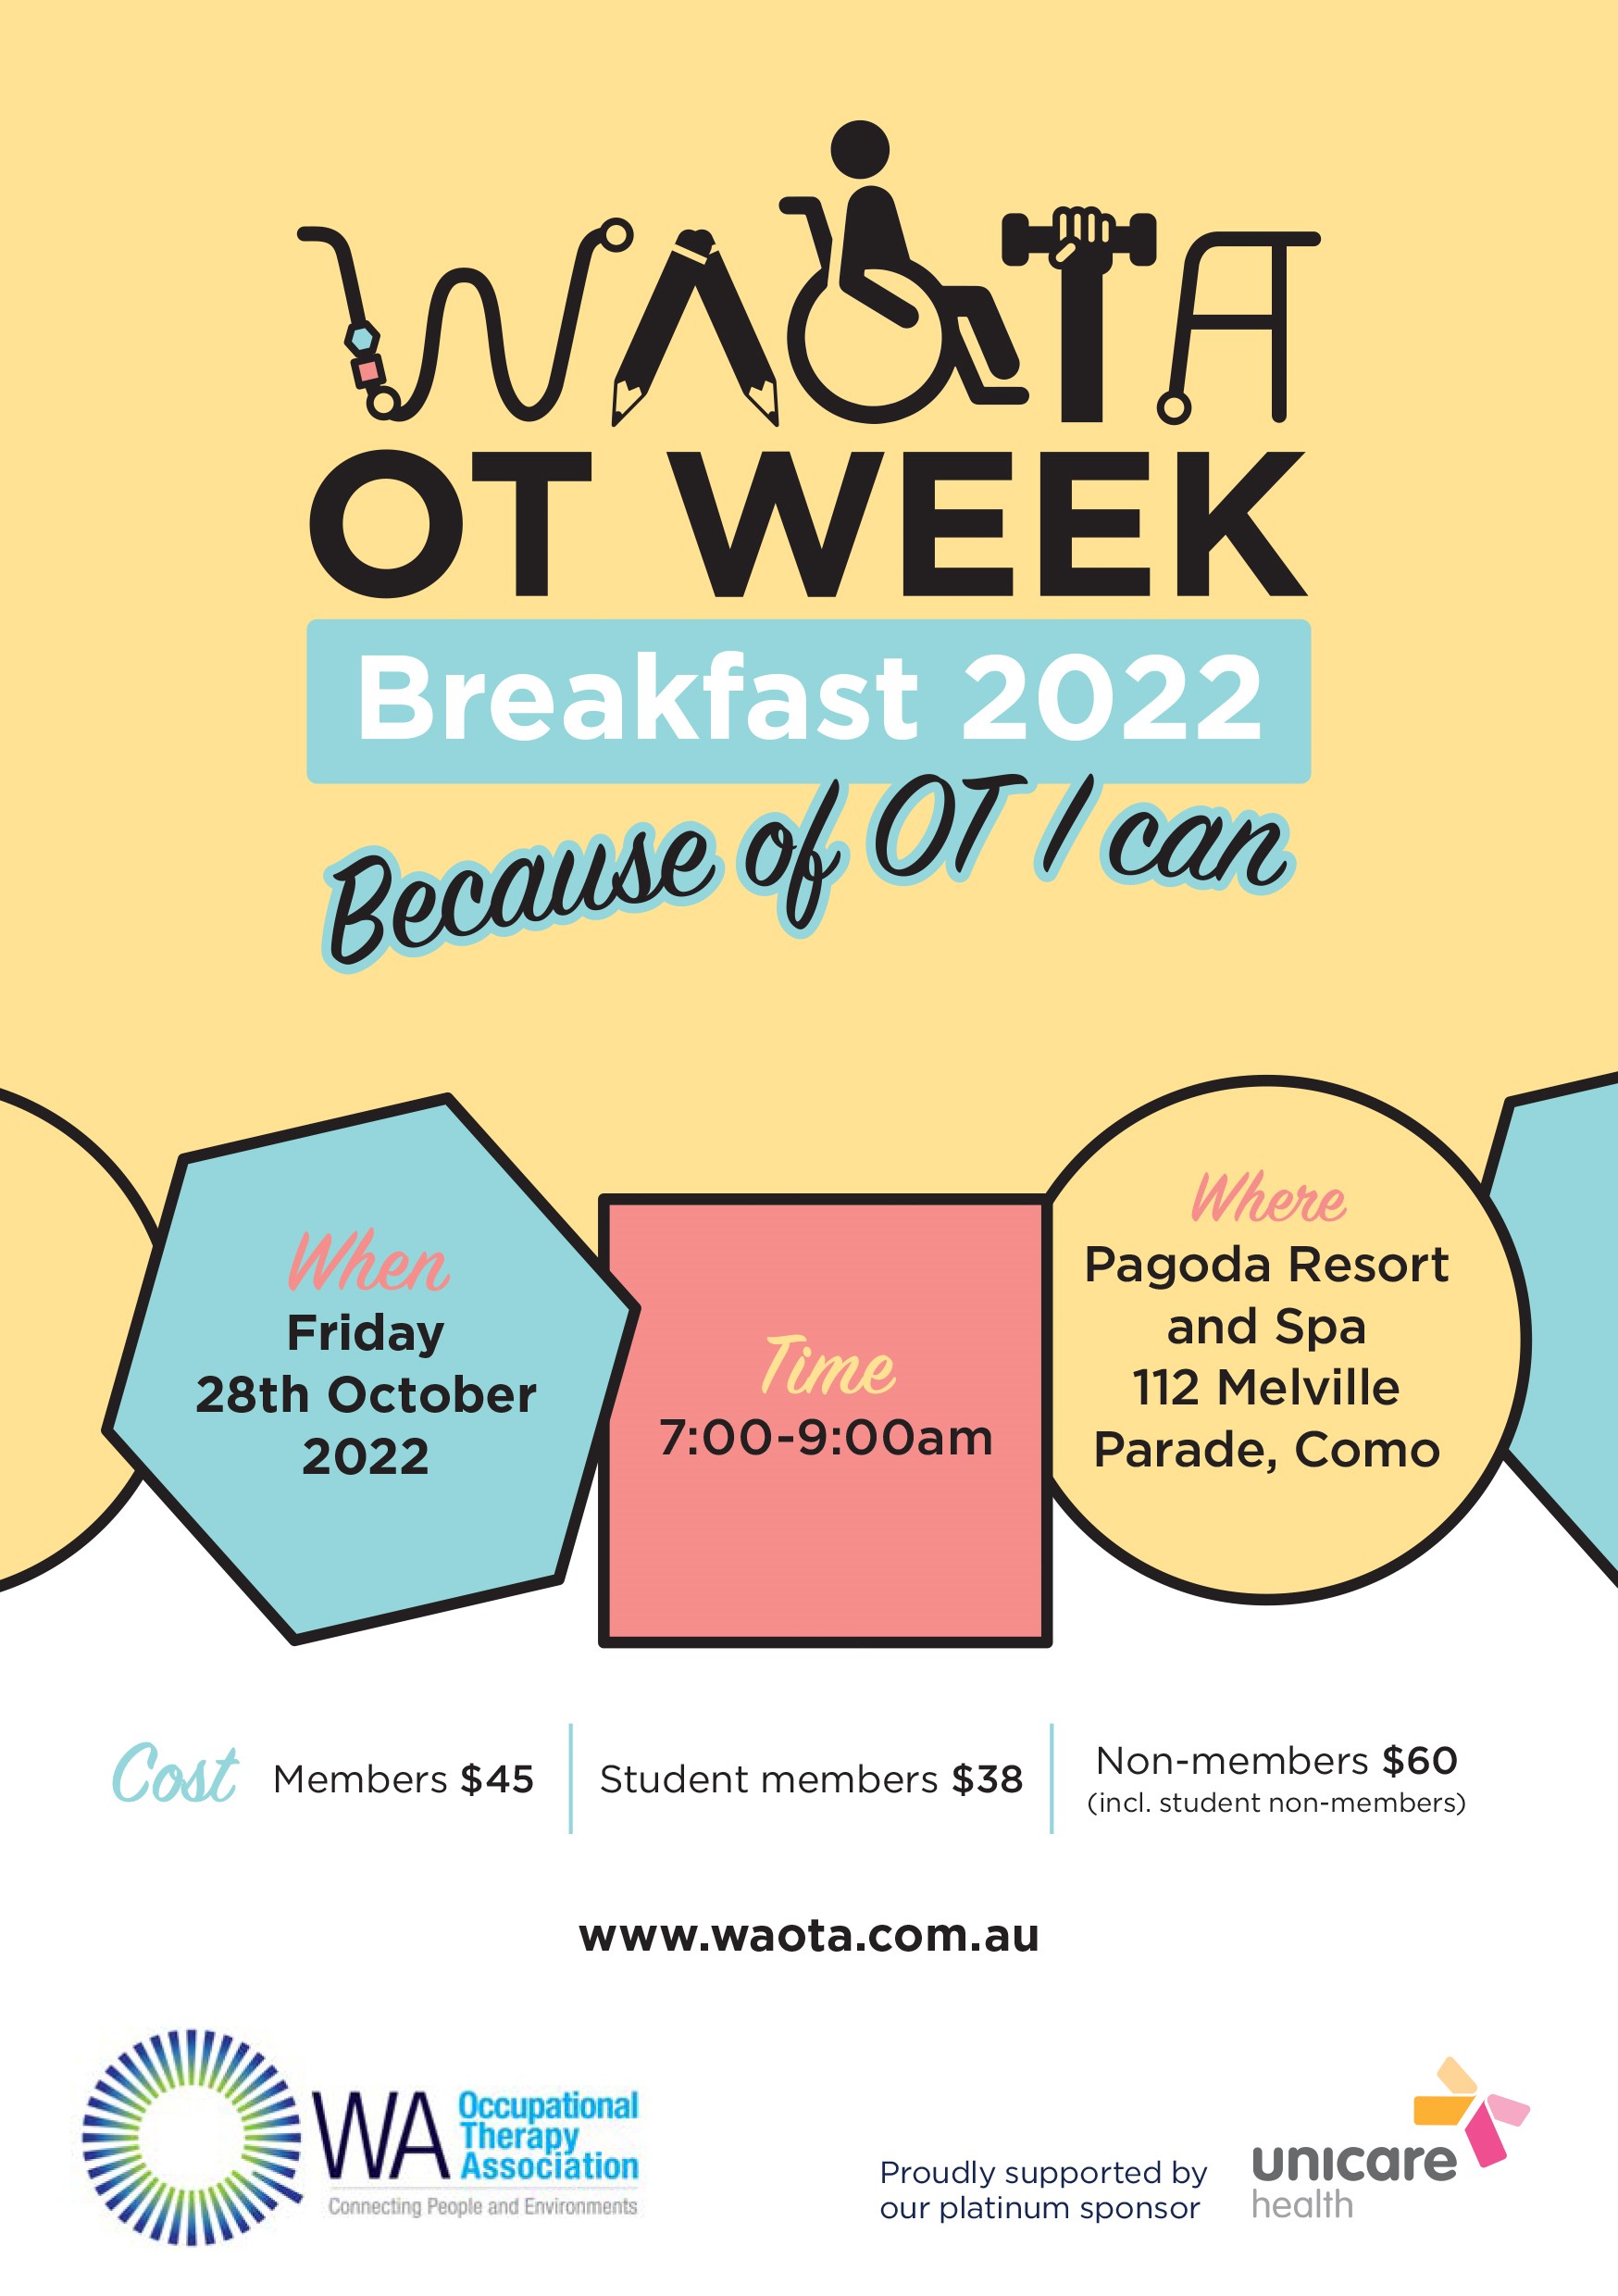 OT Week Breakfast 2022 Because of OT I Can WA Occupational Therapy